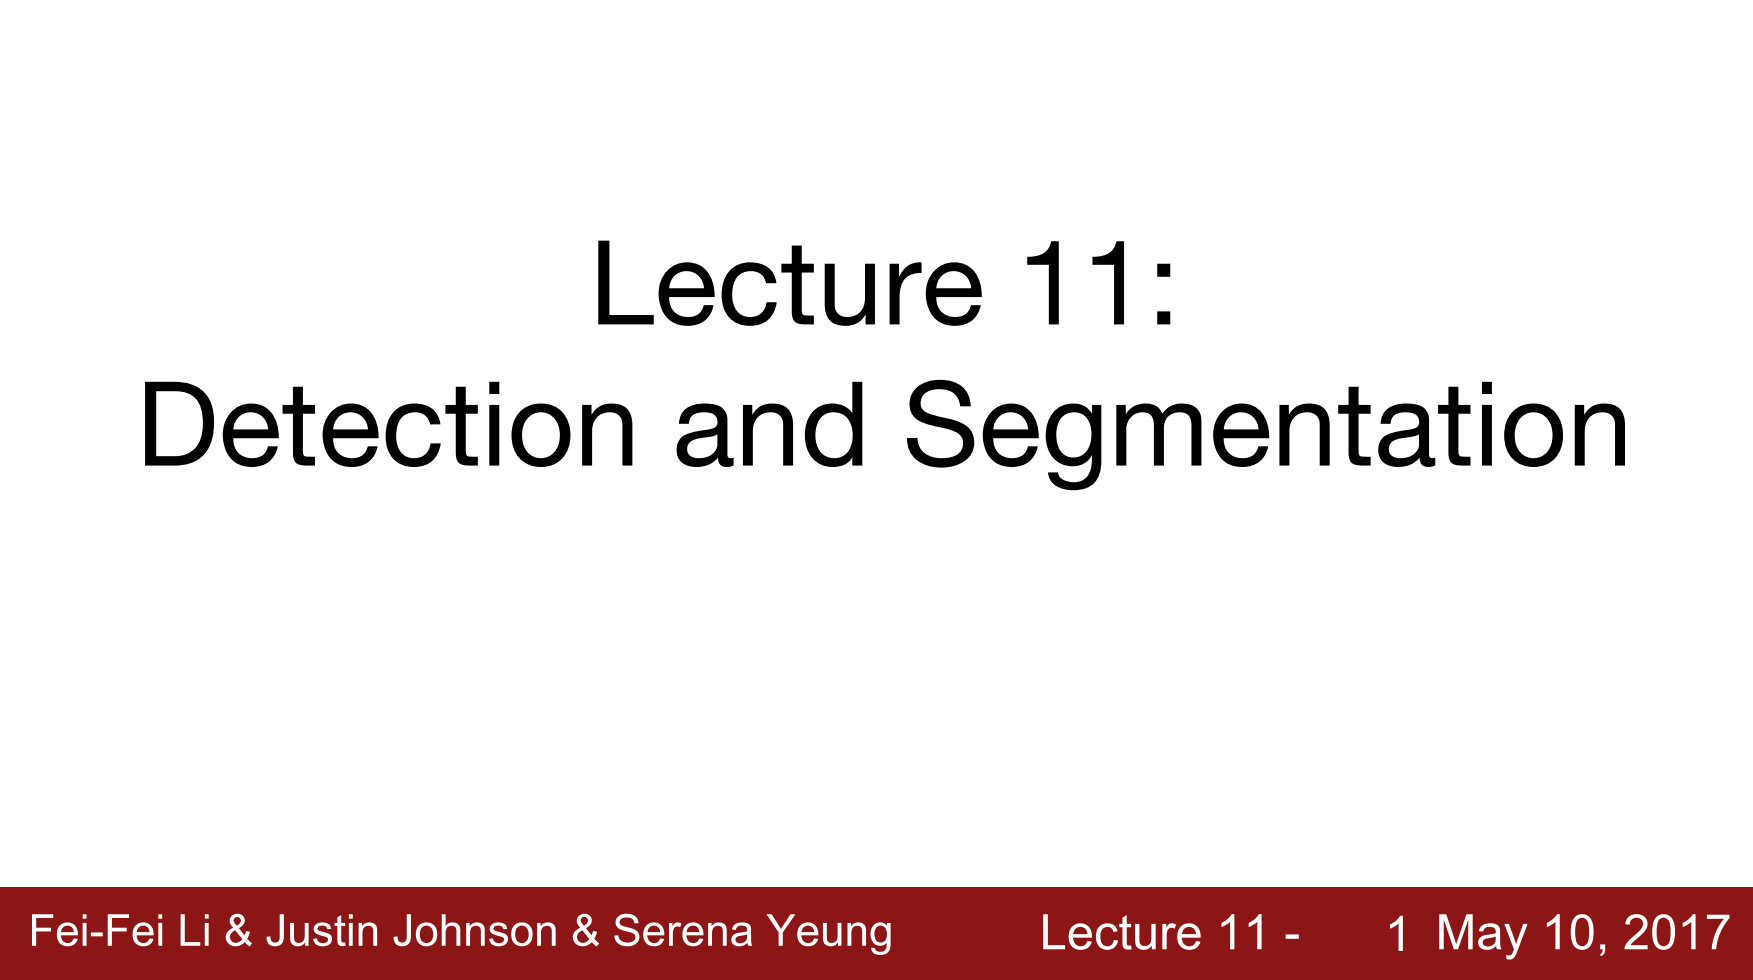 11. Detection and Segmentation